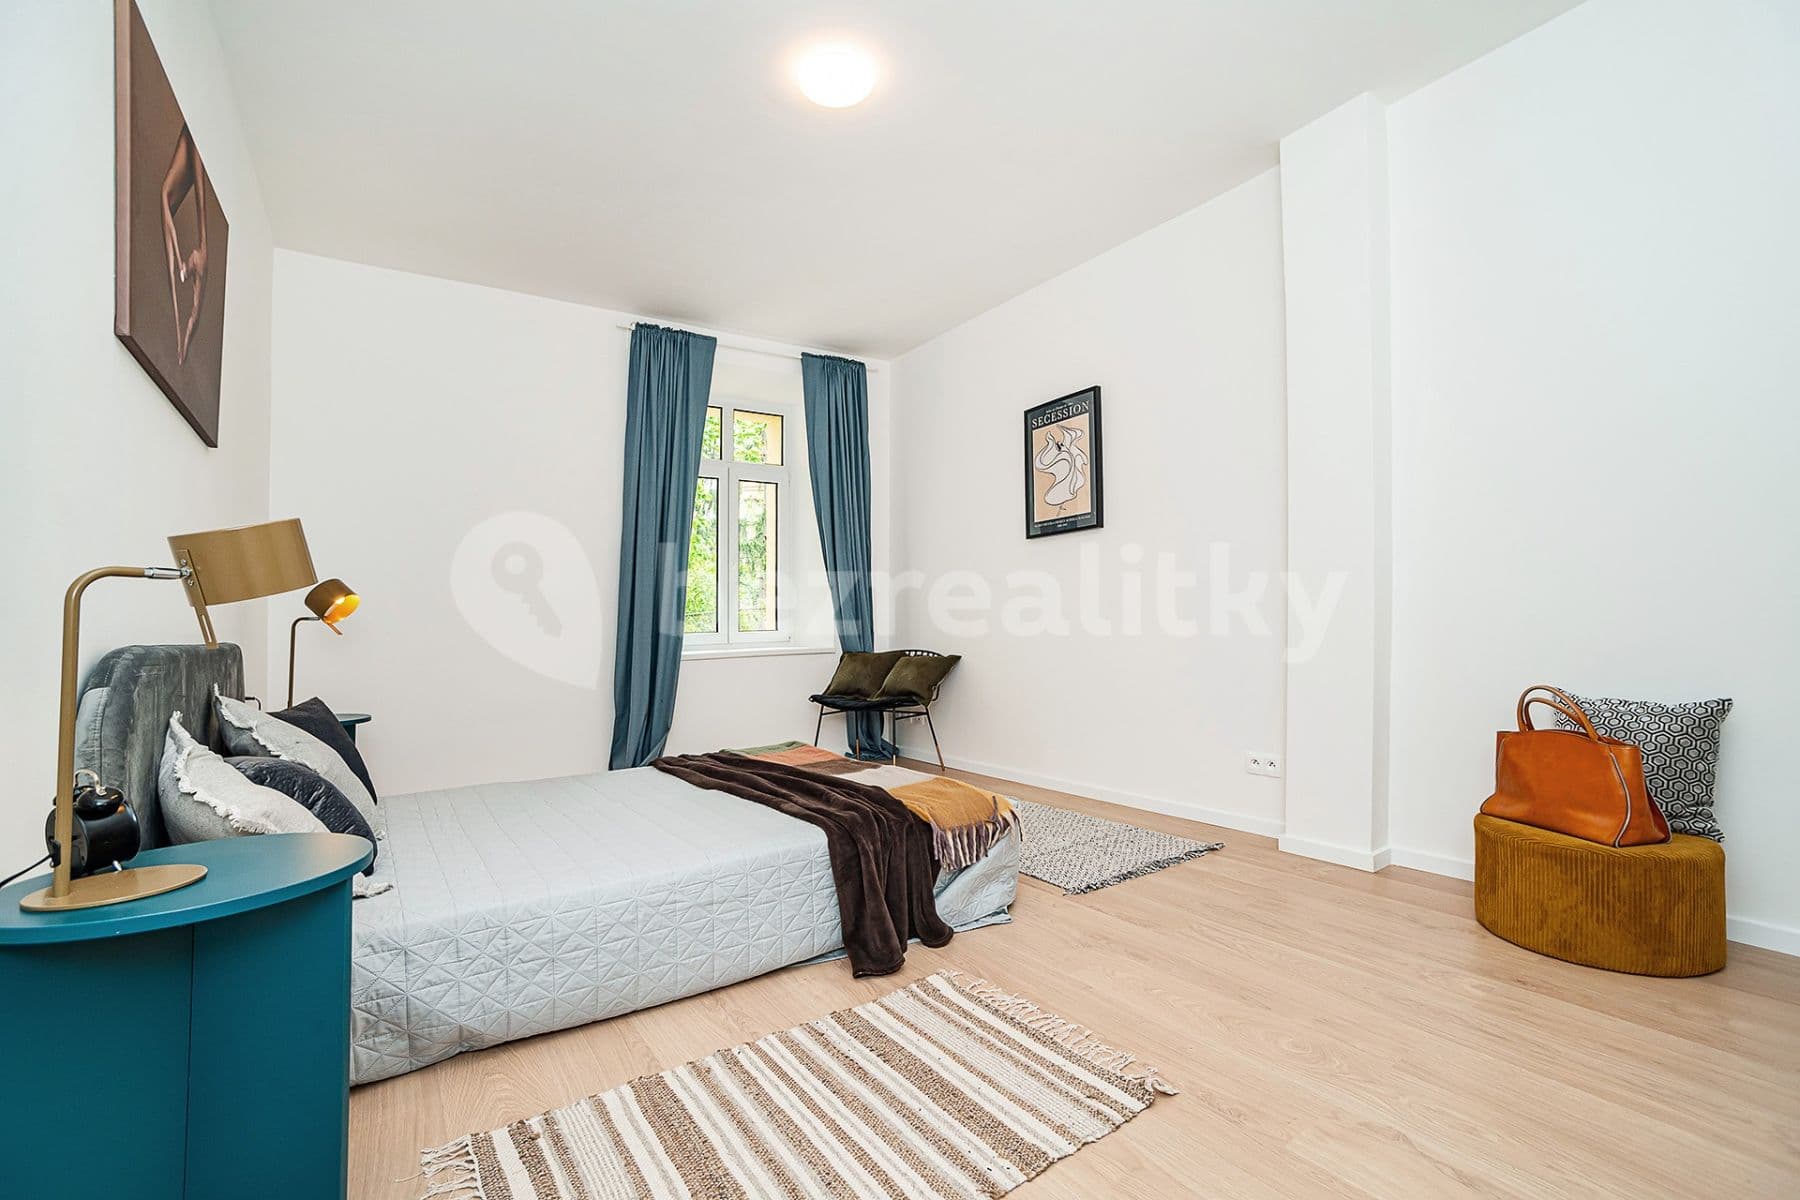 1 bedroom with open-plan kitchen flat for sale, 50 m², Na Pankráci, Prague, Prague